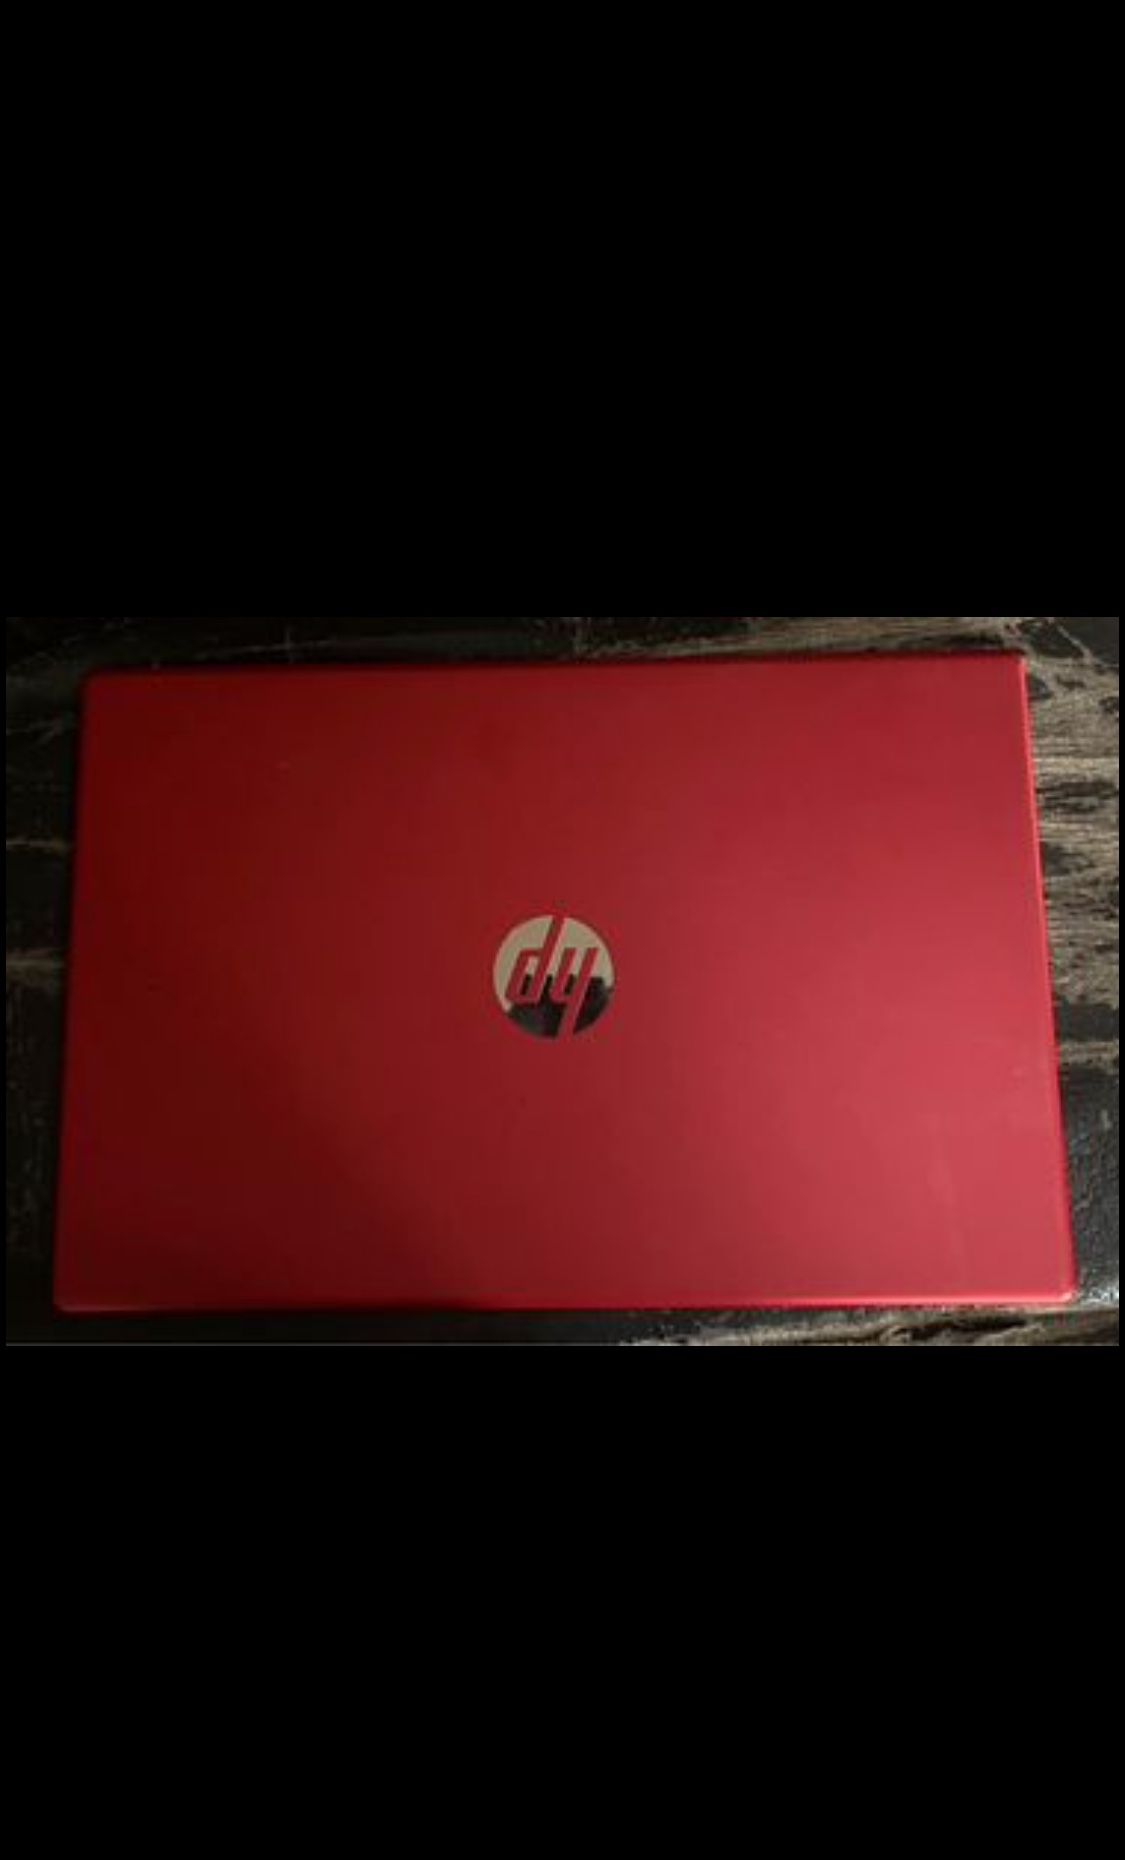 Red HP Laptop 